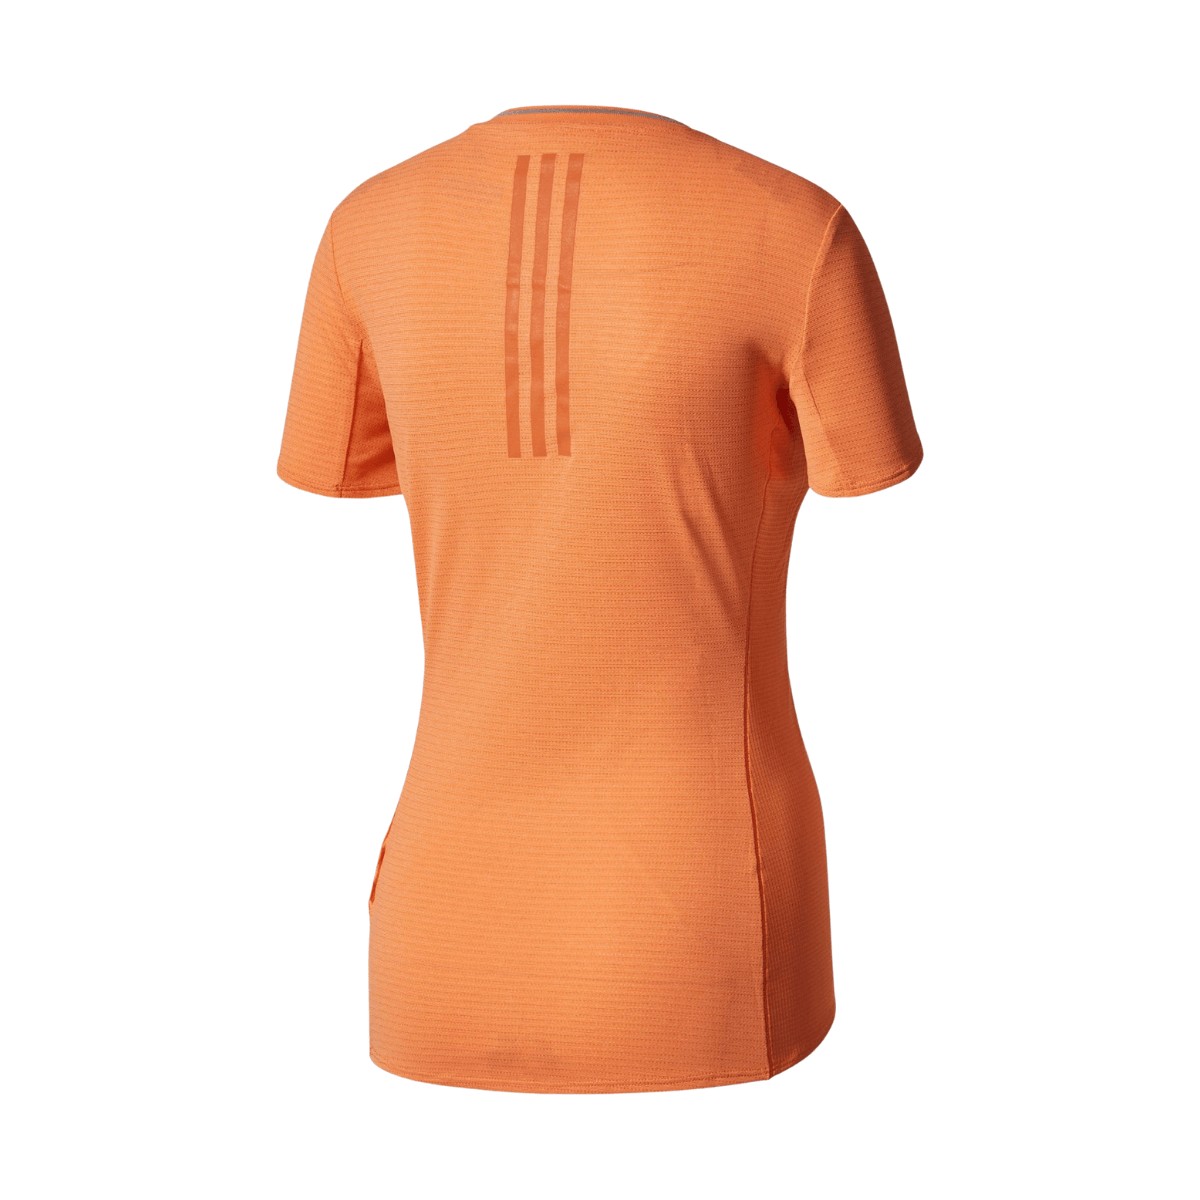 Aliado Lógicamente simpatía Running t-shirt Adidas supernova Woman color coral AW17